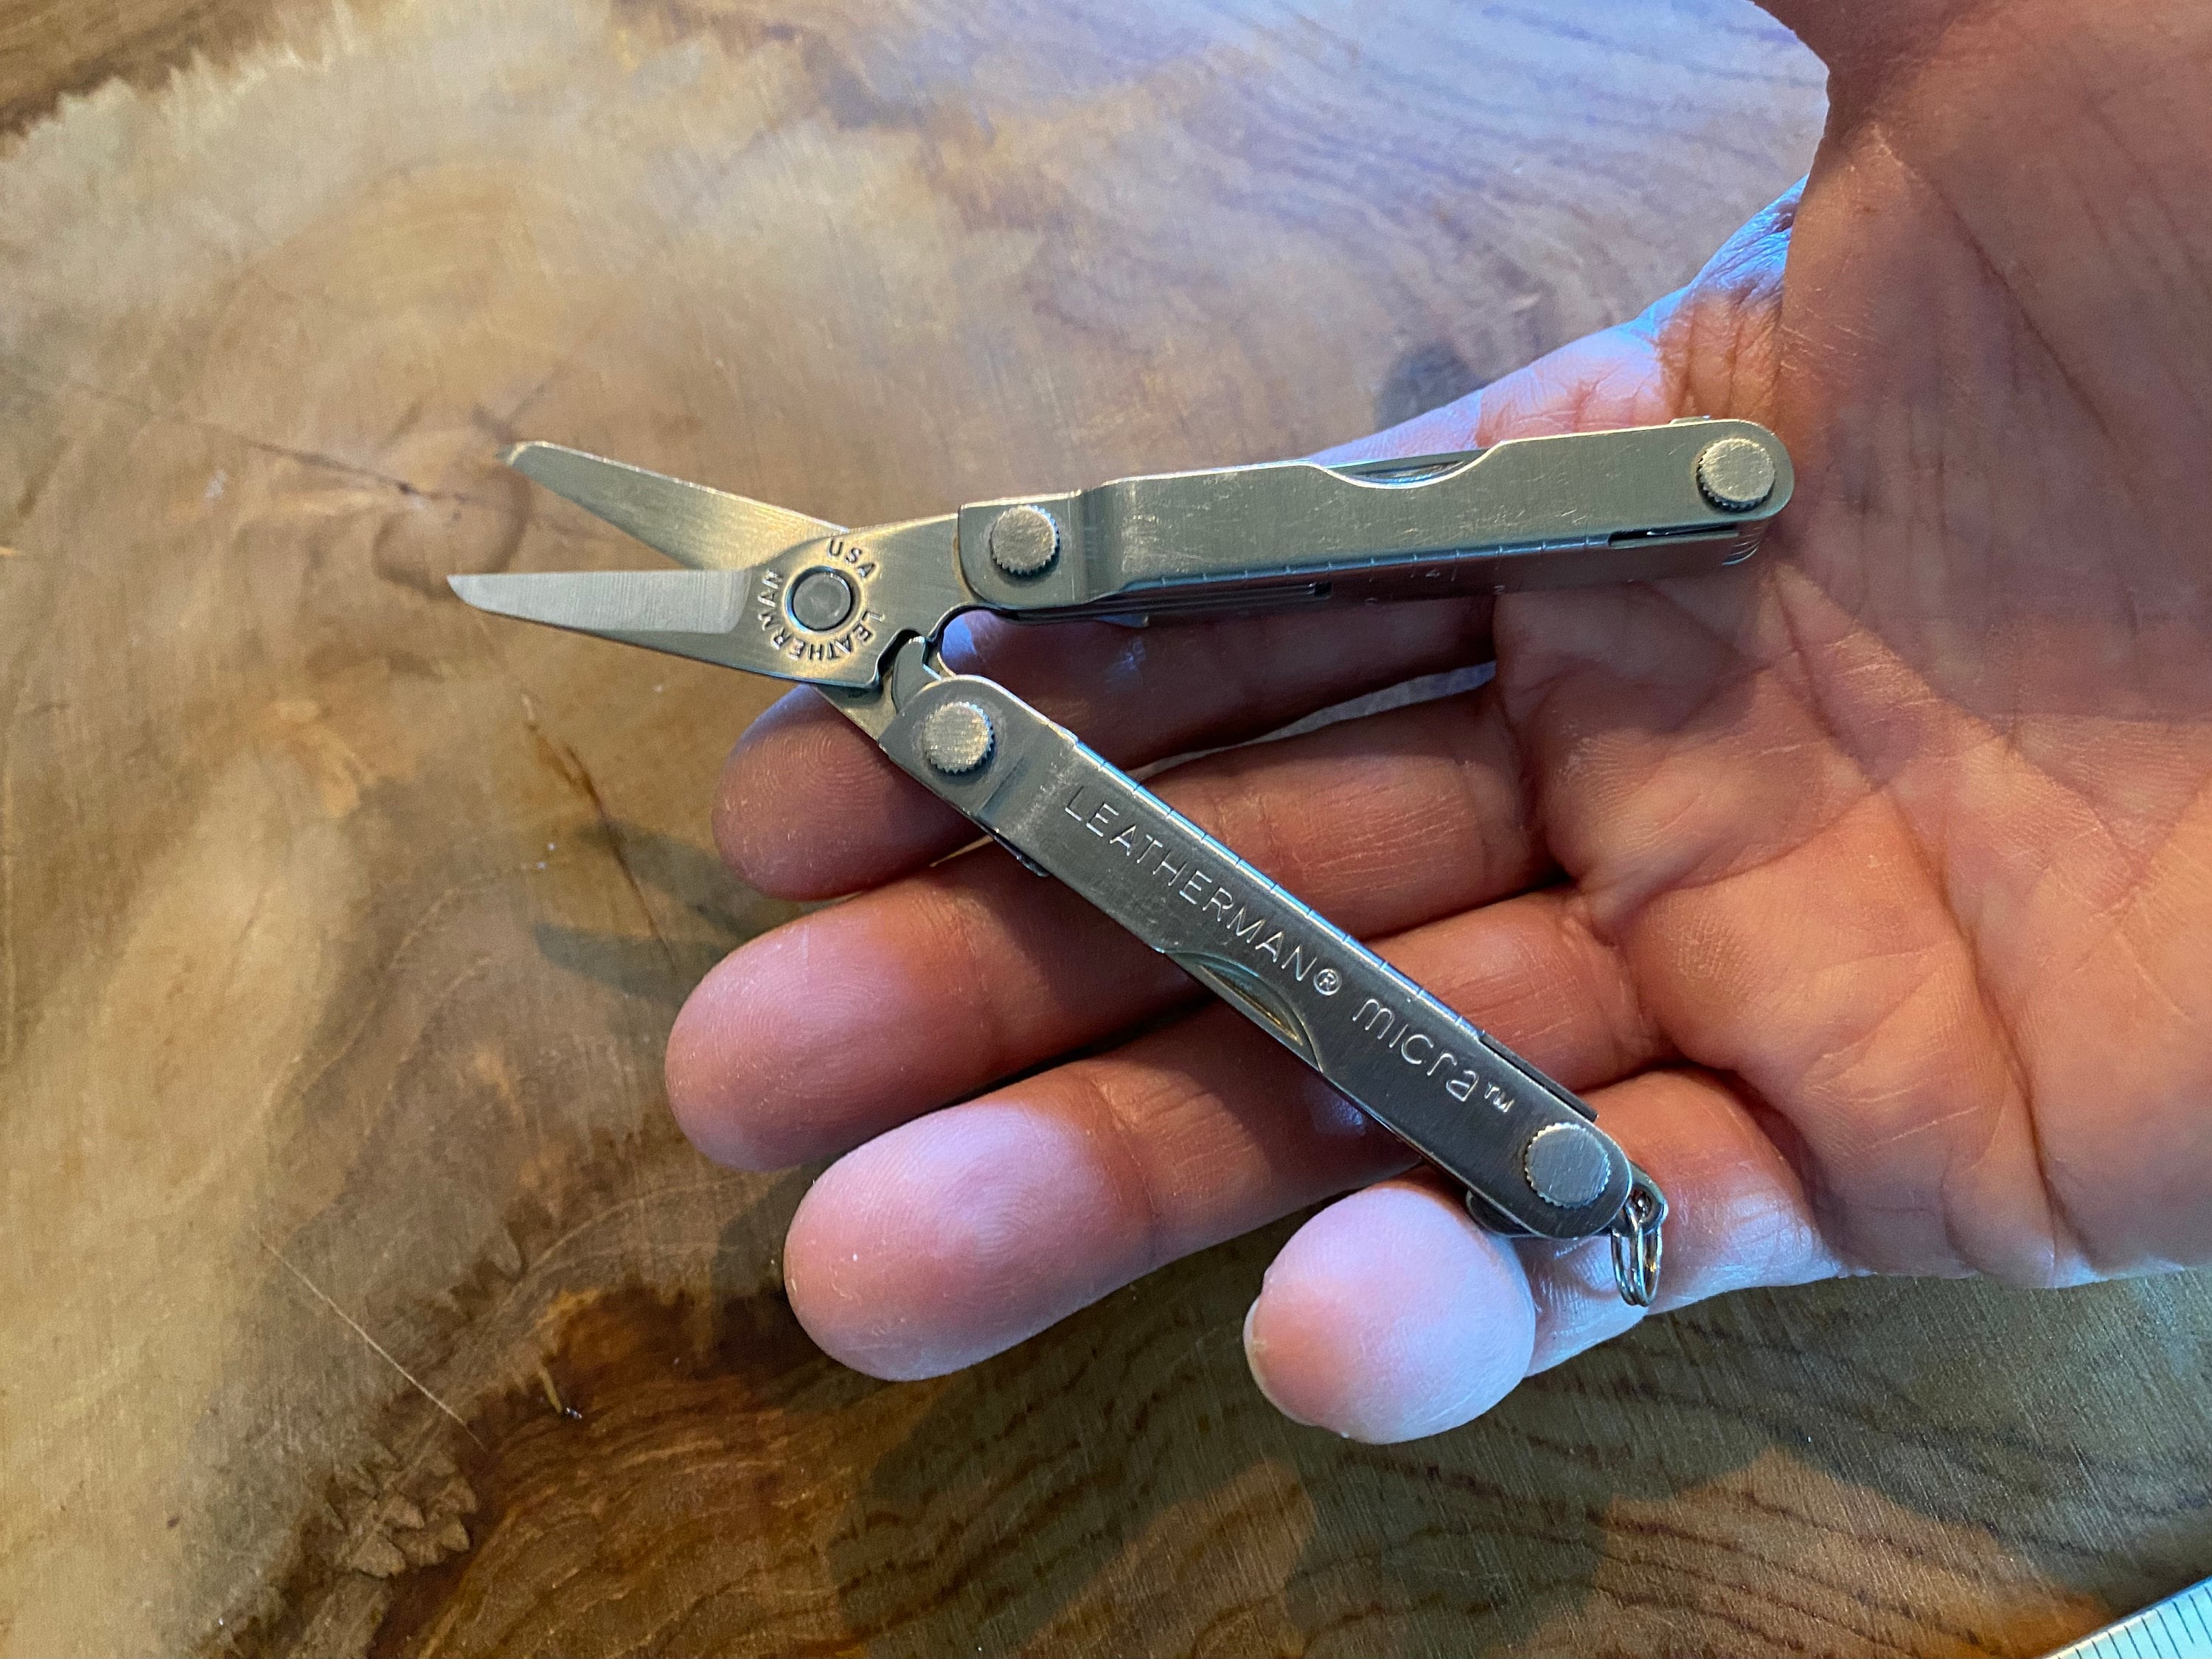 Leatherman Micra Keychain Pocket Stainless Multi-Tool Knife